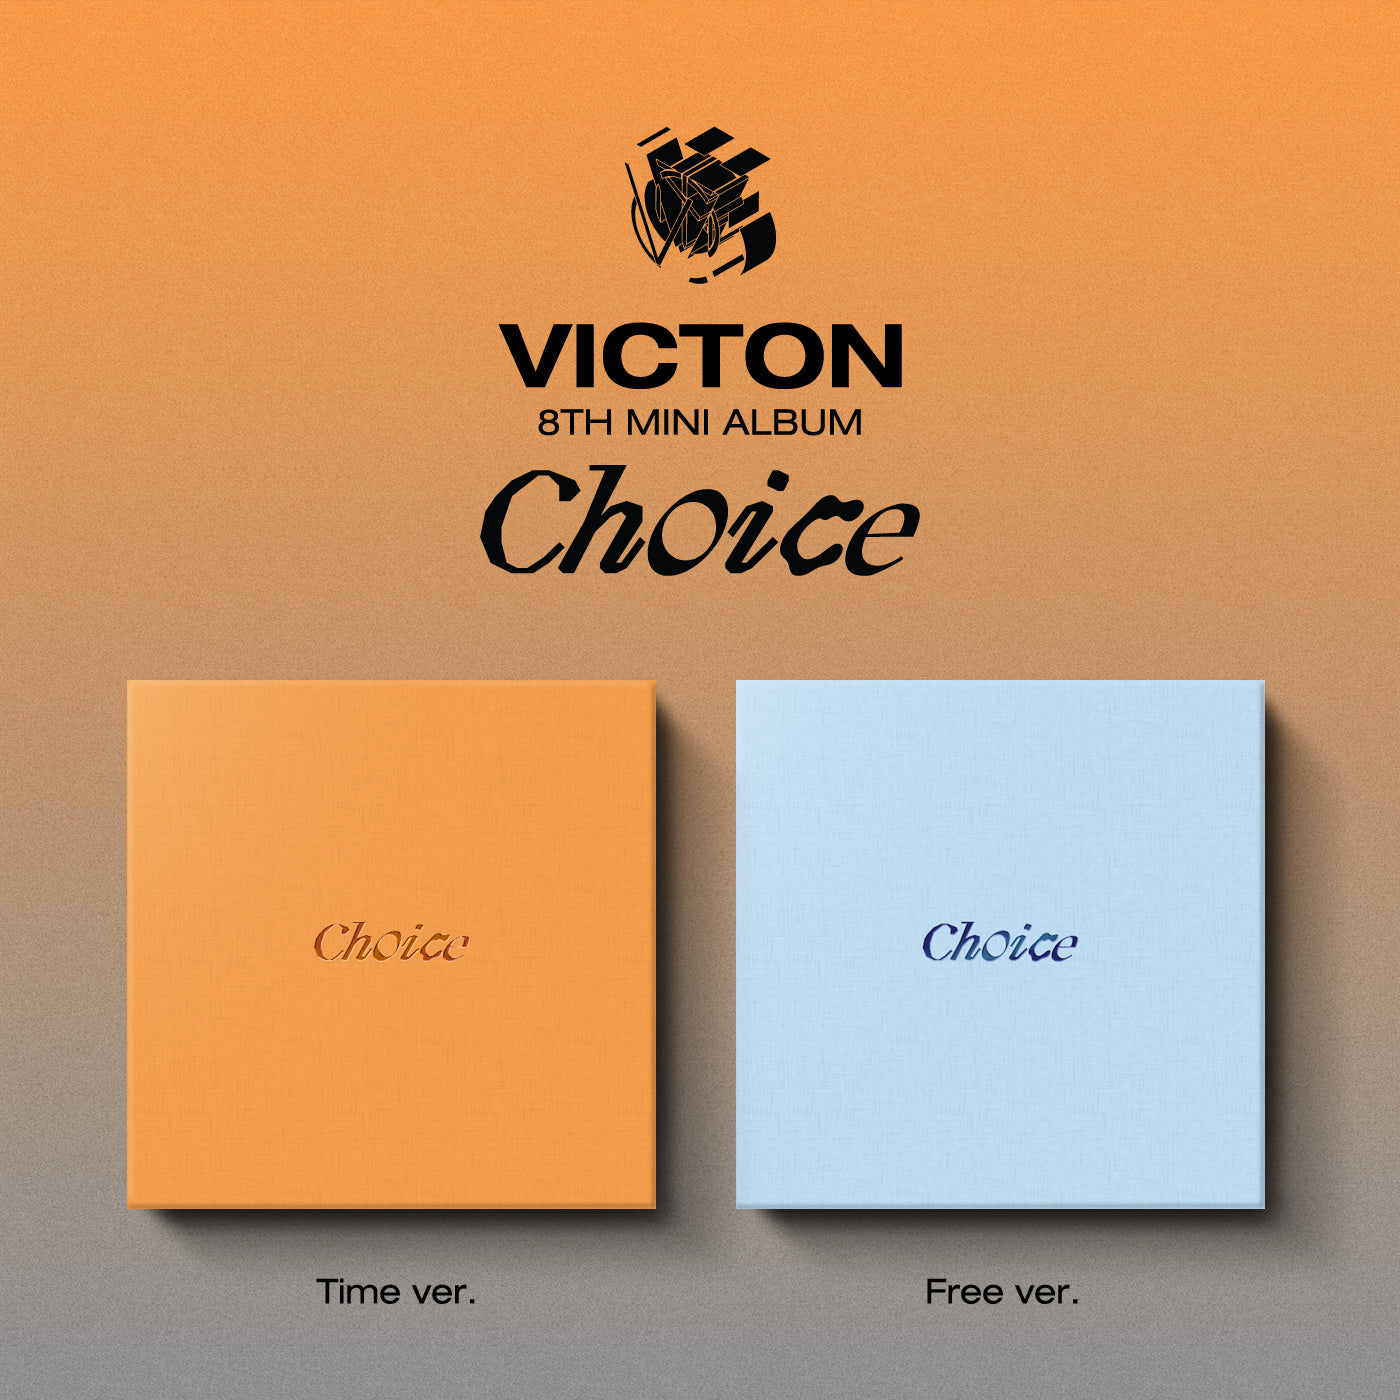 VICTON 8TH MINI ALBUM 'CHOICE' SET COVER